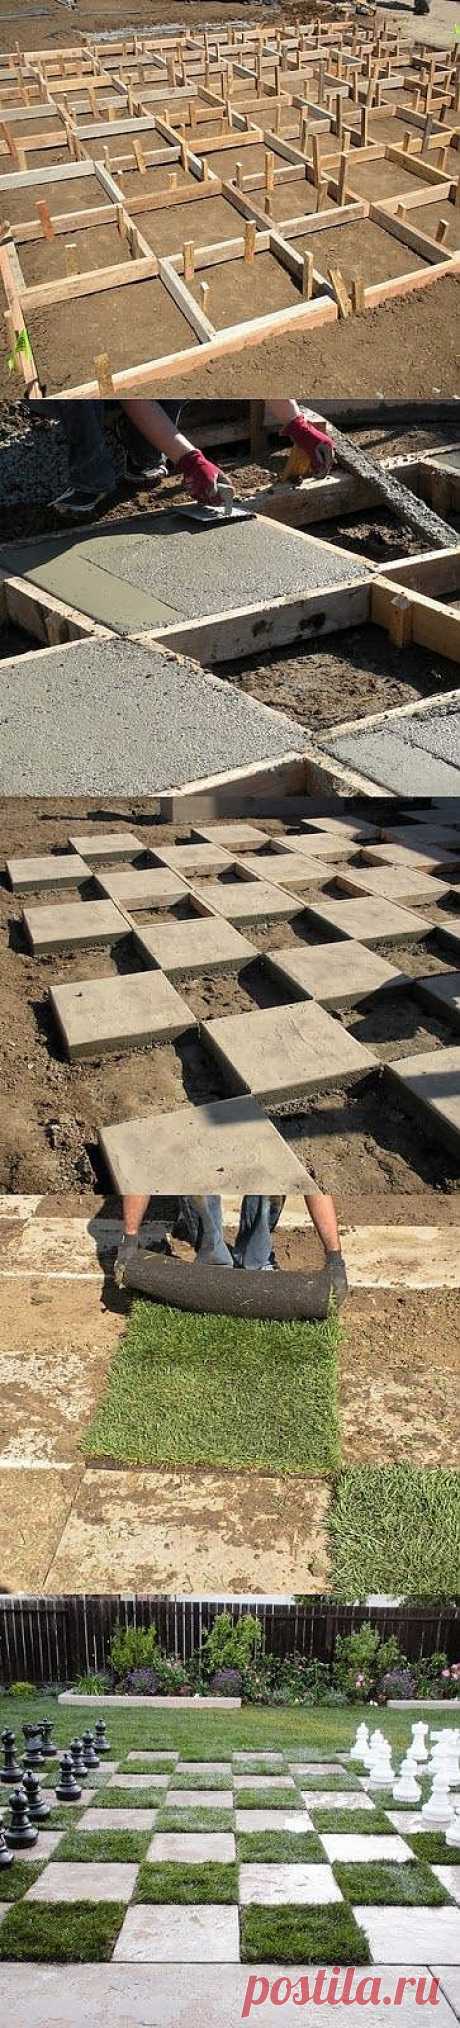 Make a Giant Chess Board In Your Backyard, you ... | Garden and Yard